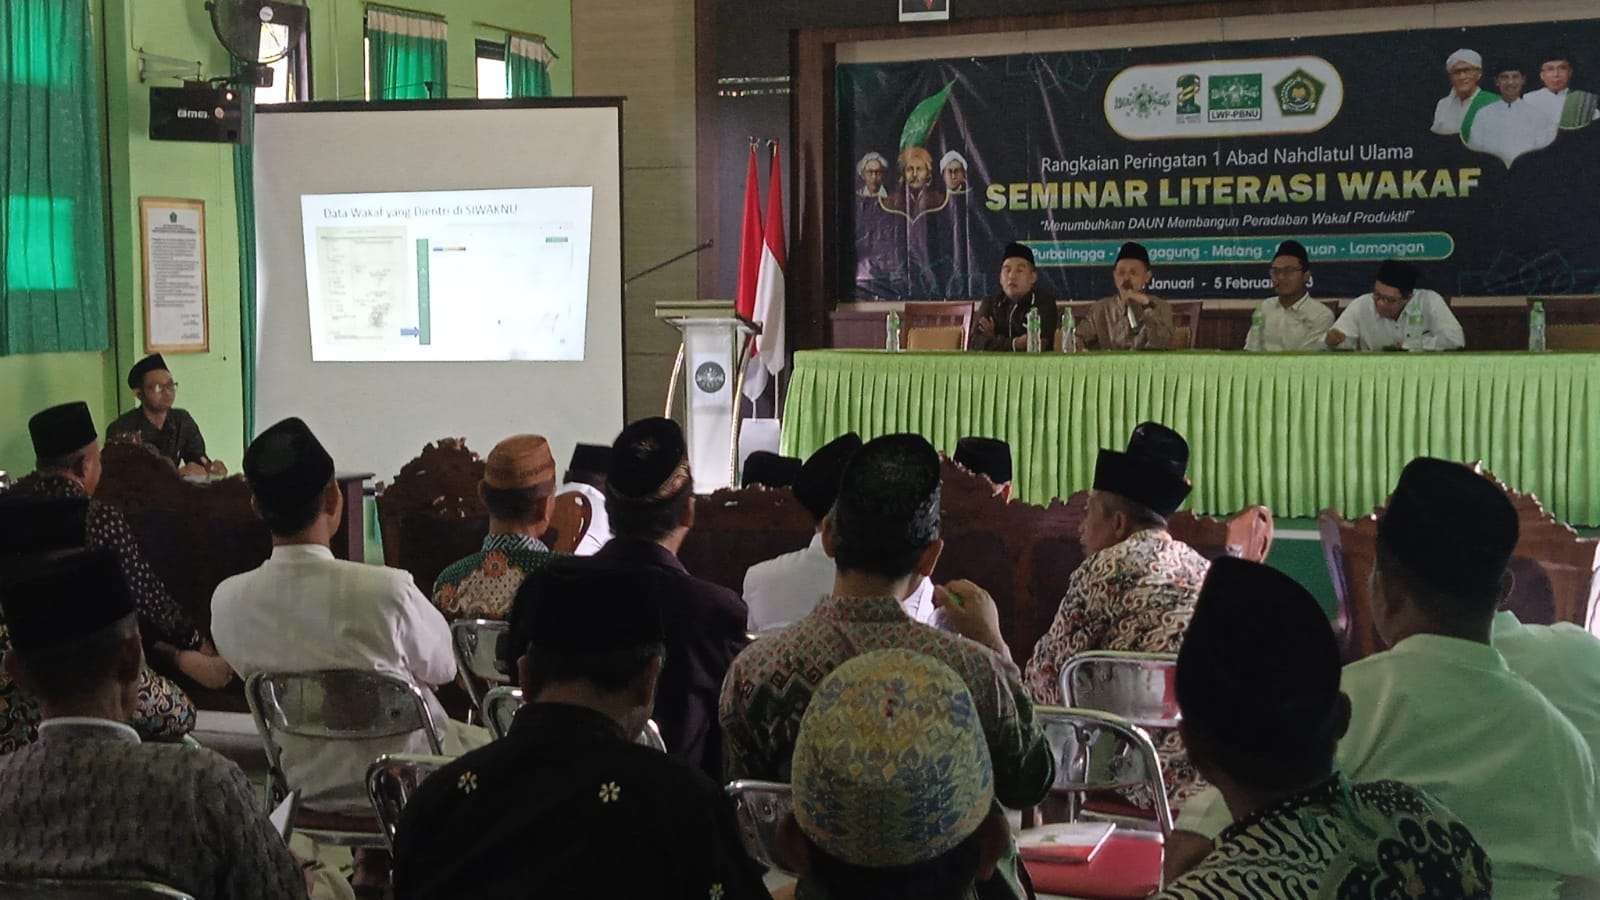 Keterangan Foto : Seminar literasi wakaf yang digelar LWPNU di Lamongan (Foto: Imron Rosidi/ngopibareng.id)